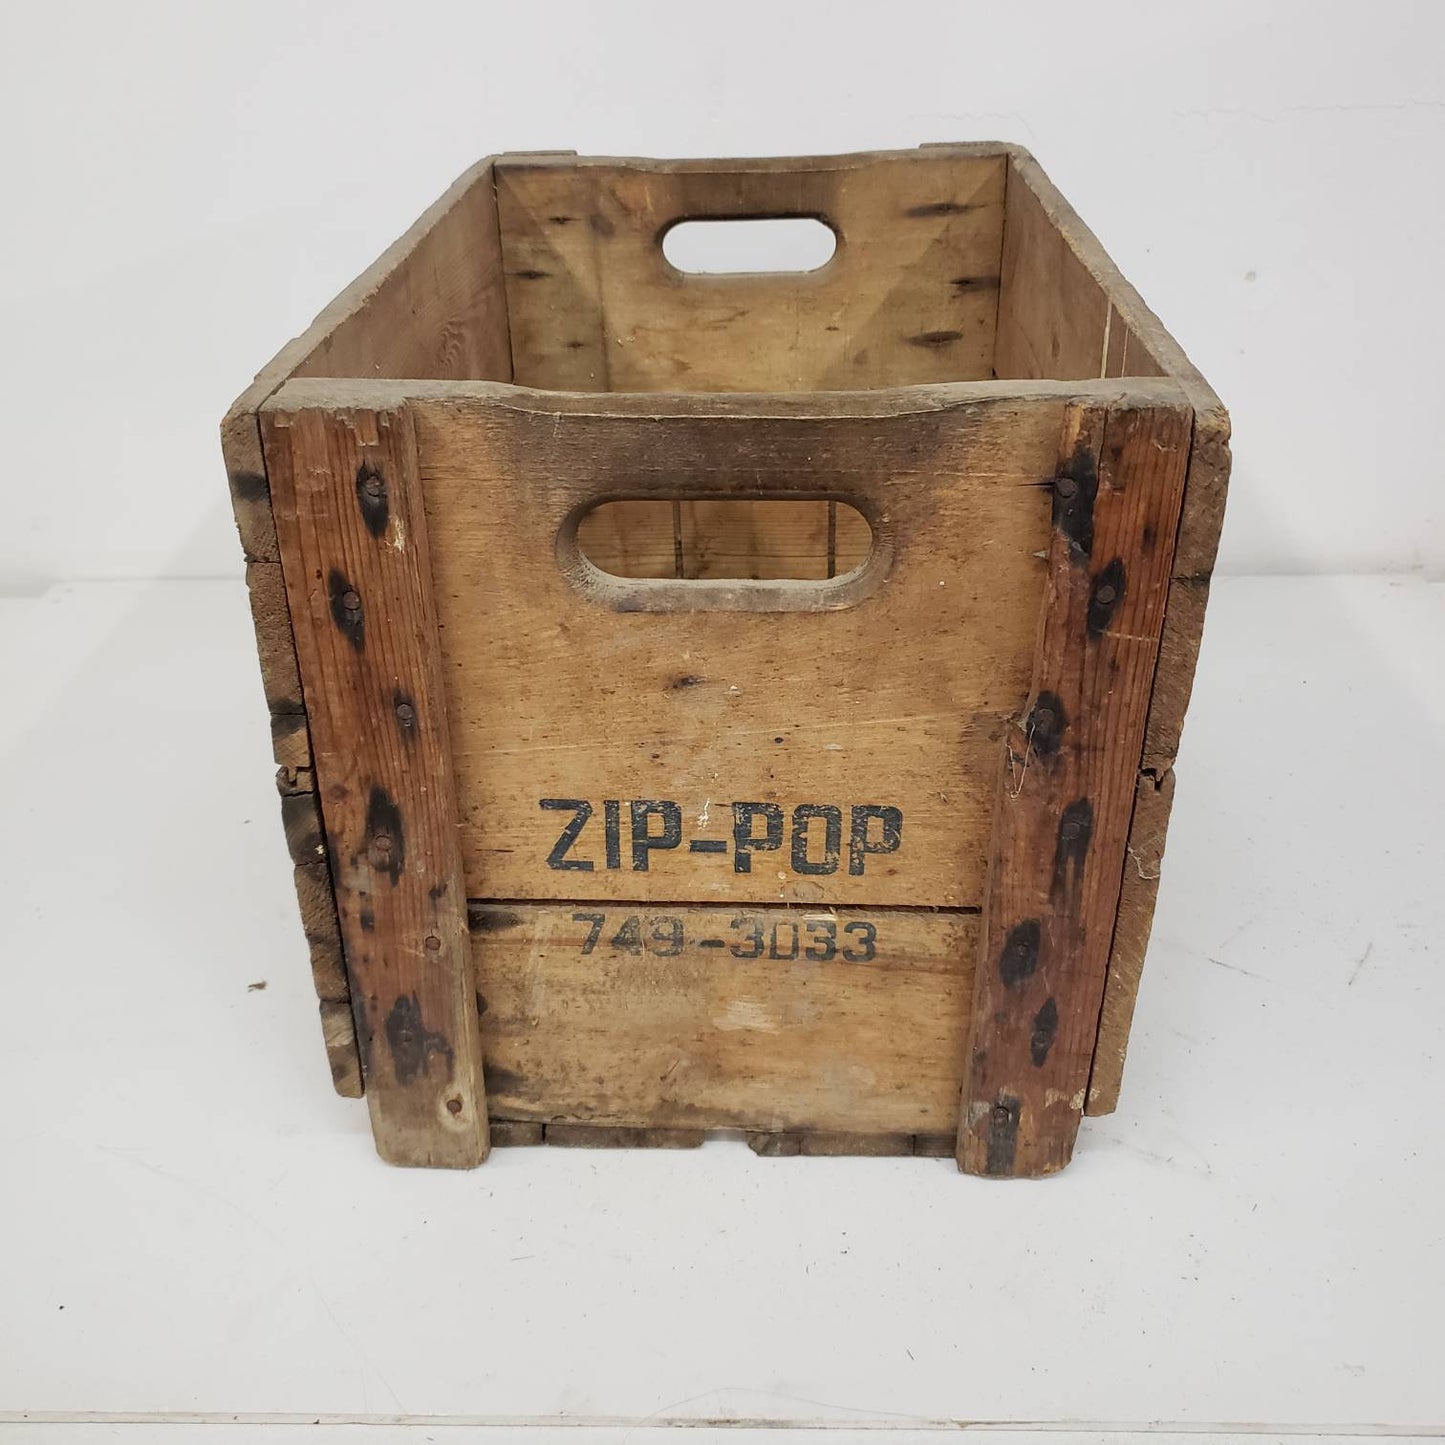 zip-pop crate vintage wooden soda delivery box